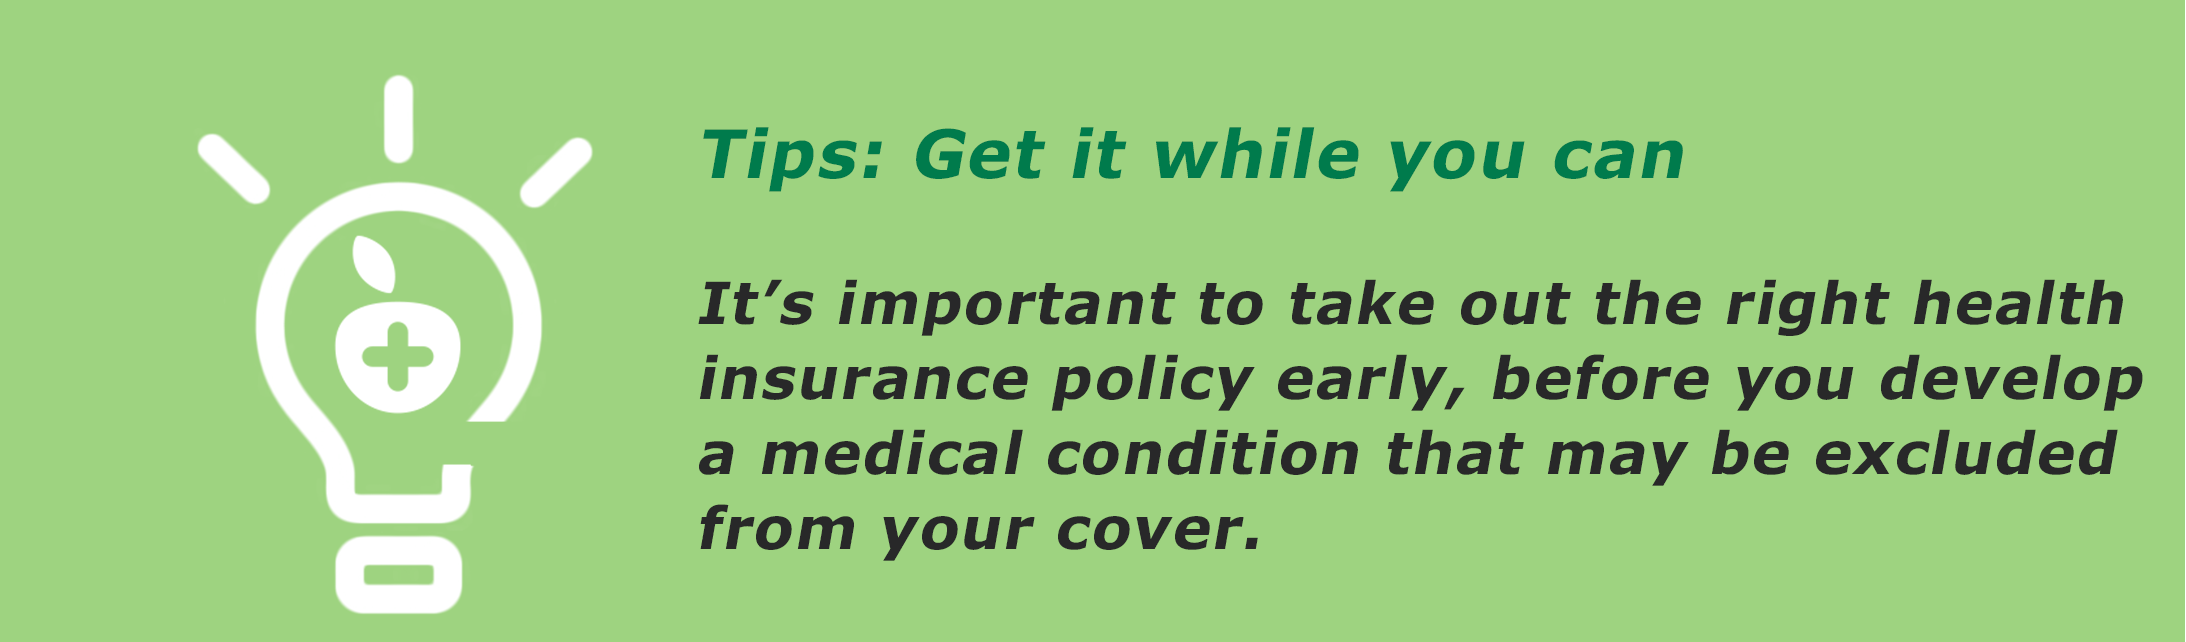 health insurance guide-tip1